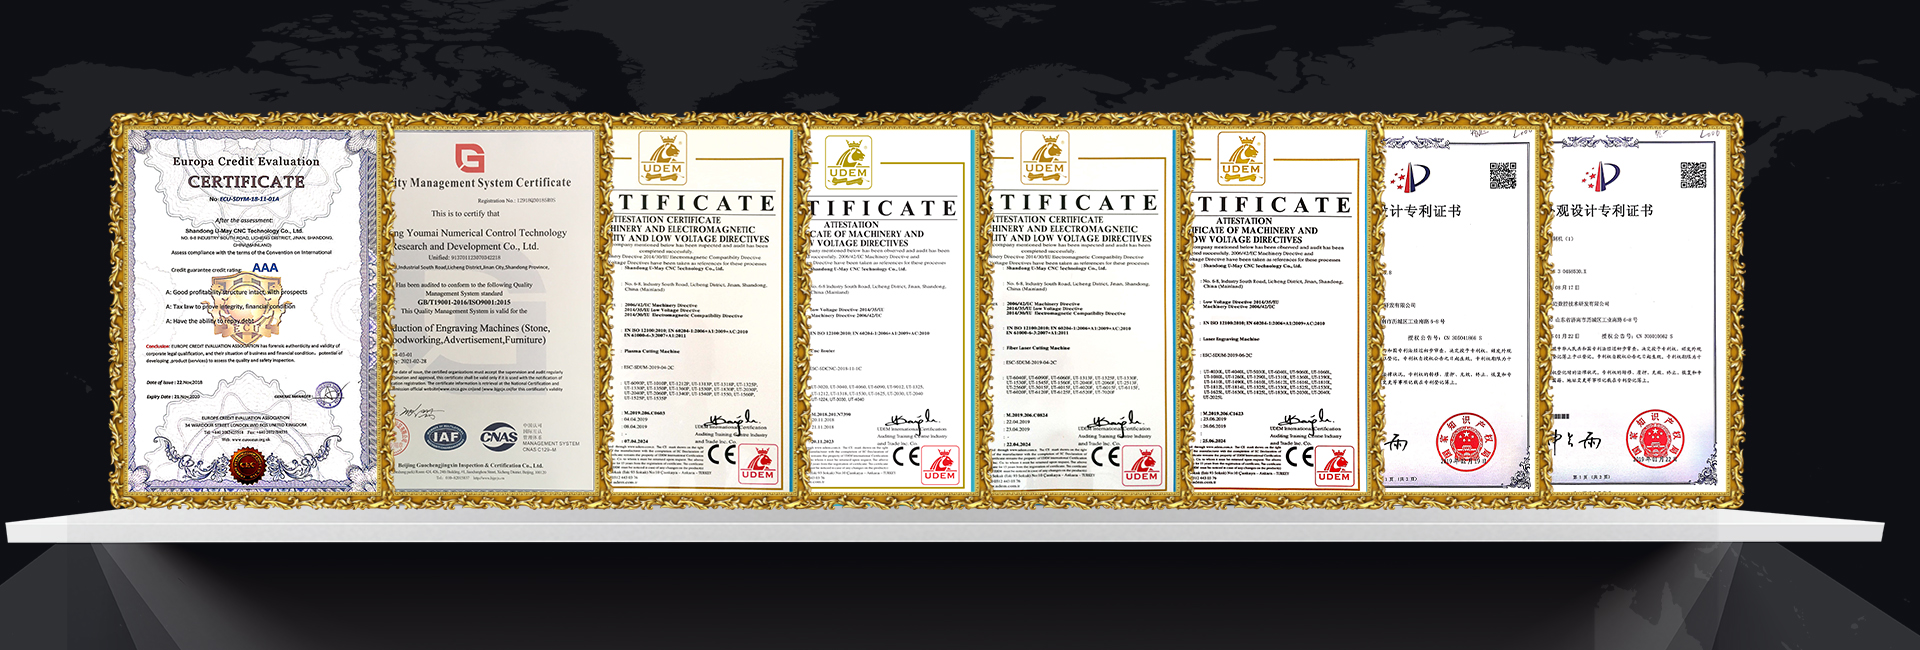 UTECH CNC Router Certification